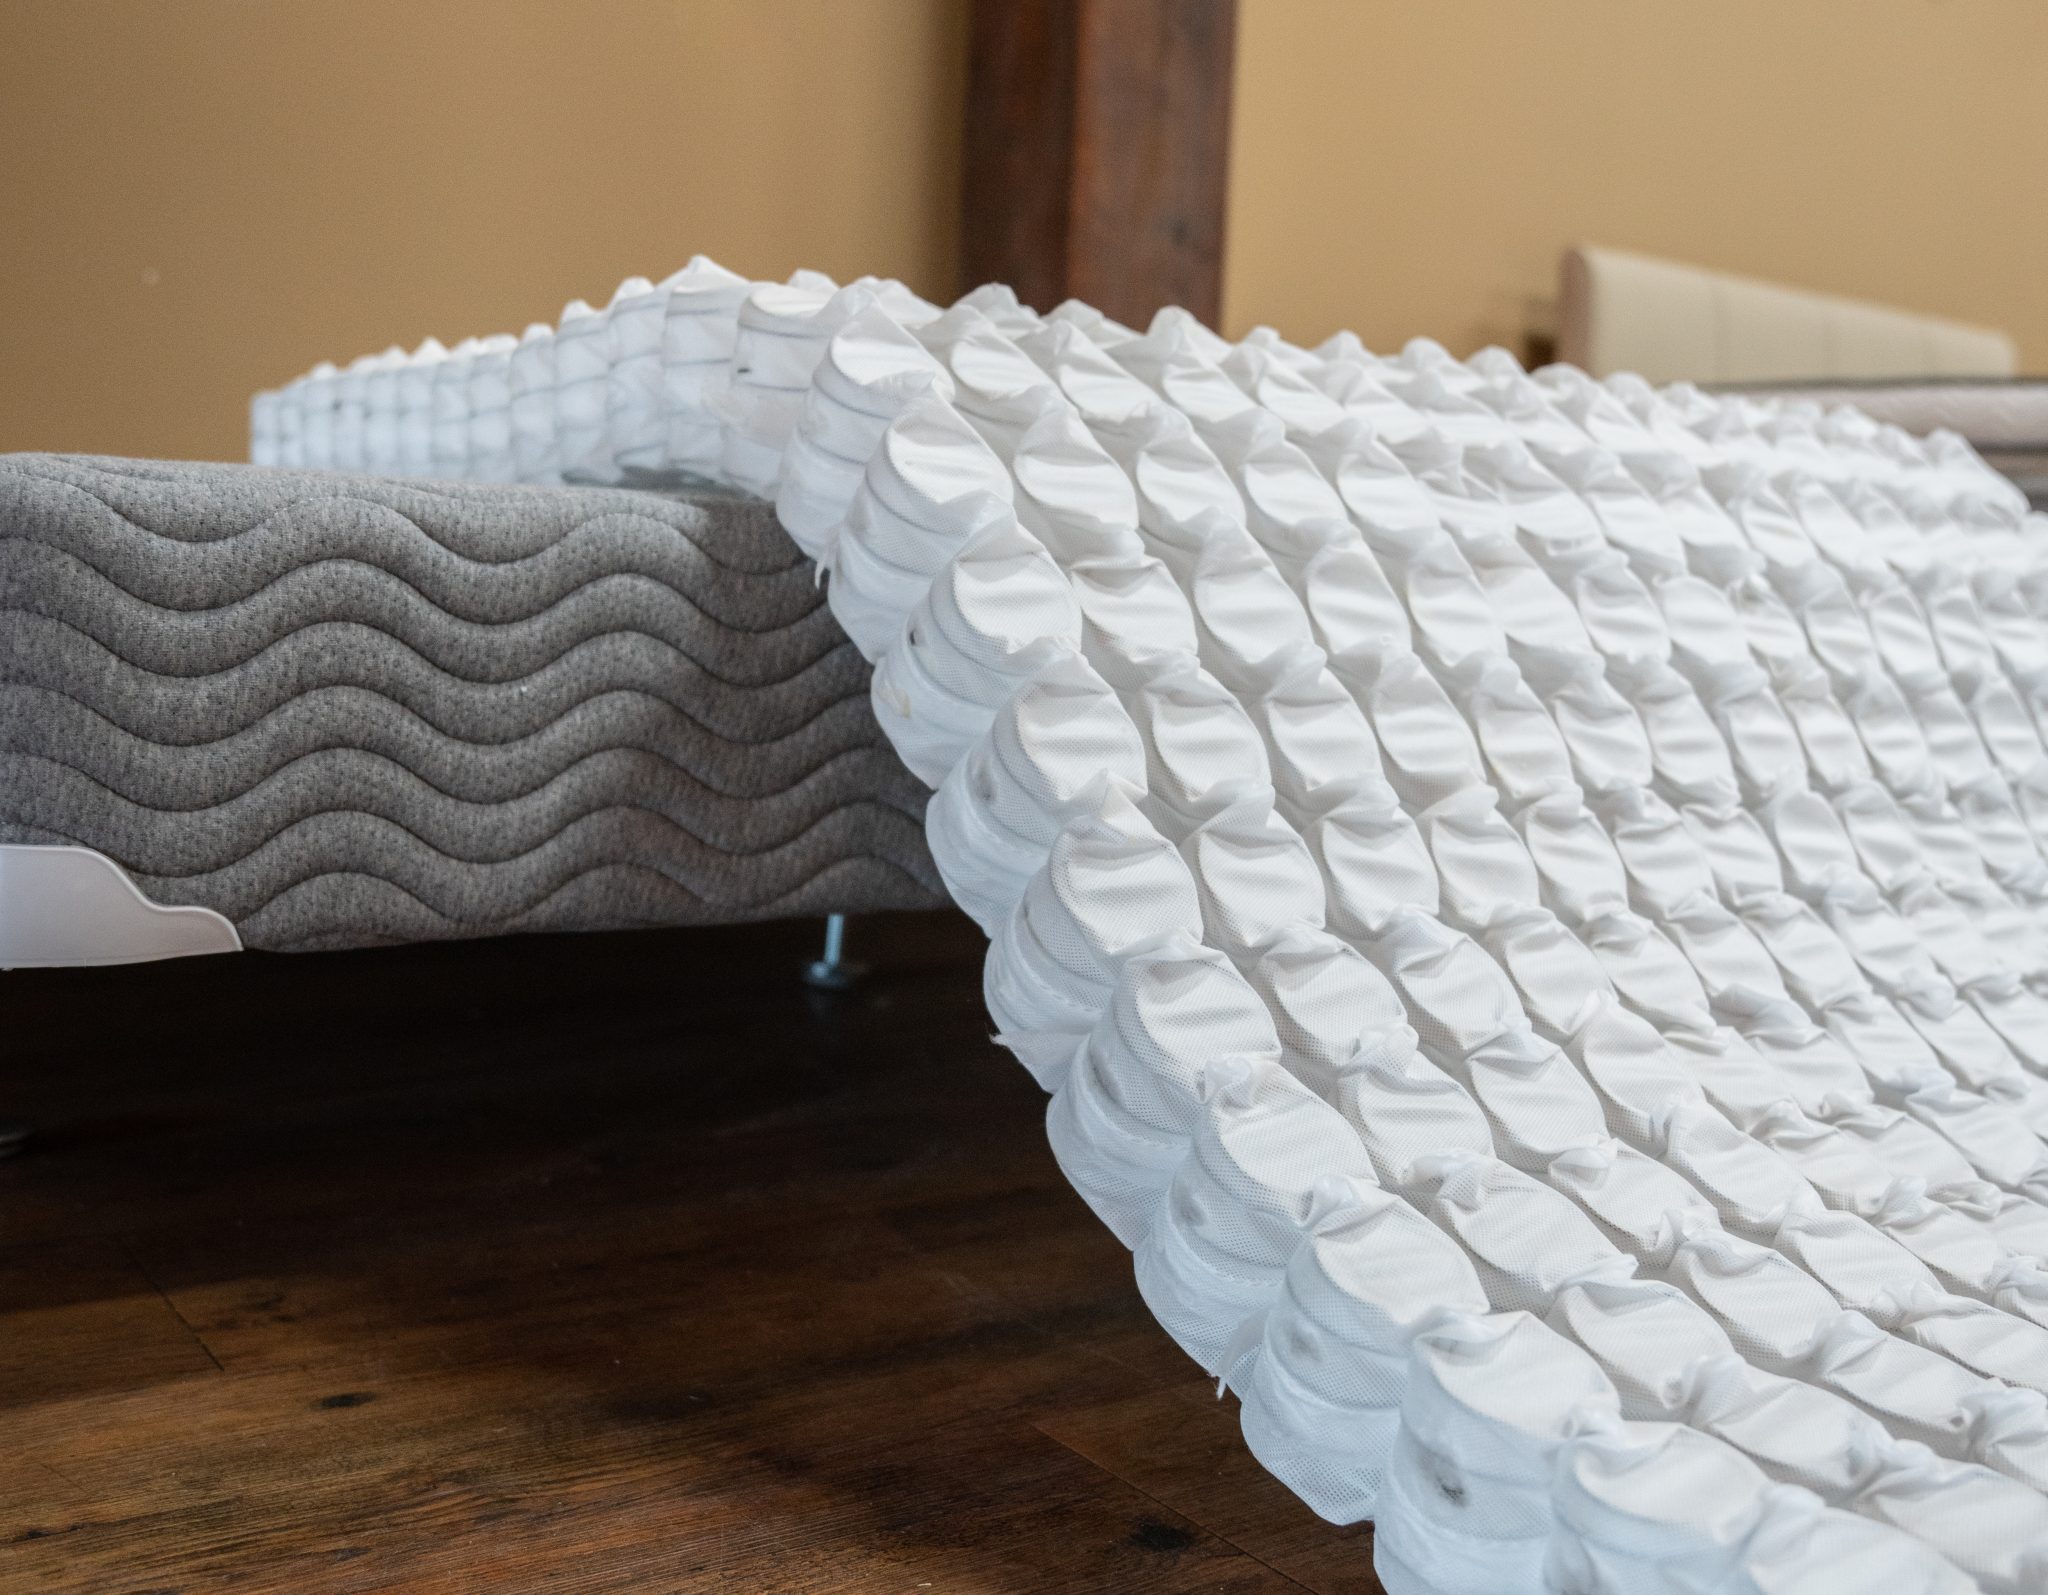 replcement mattress for hide a bed